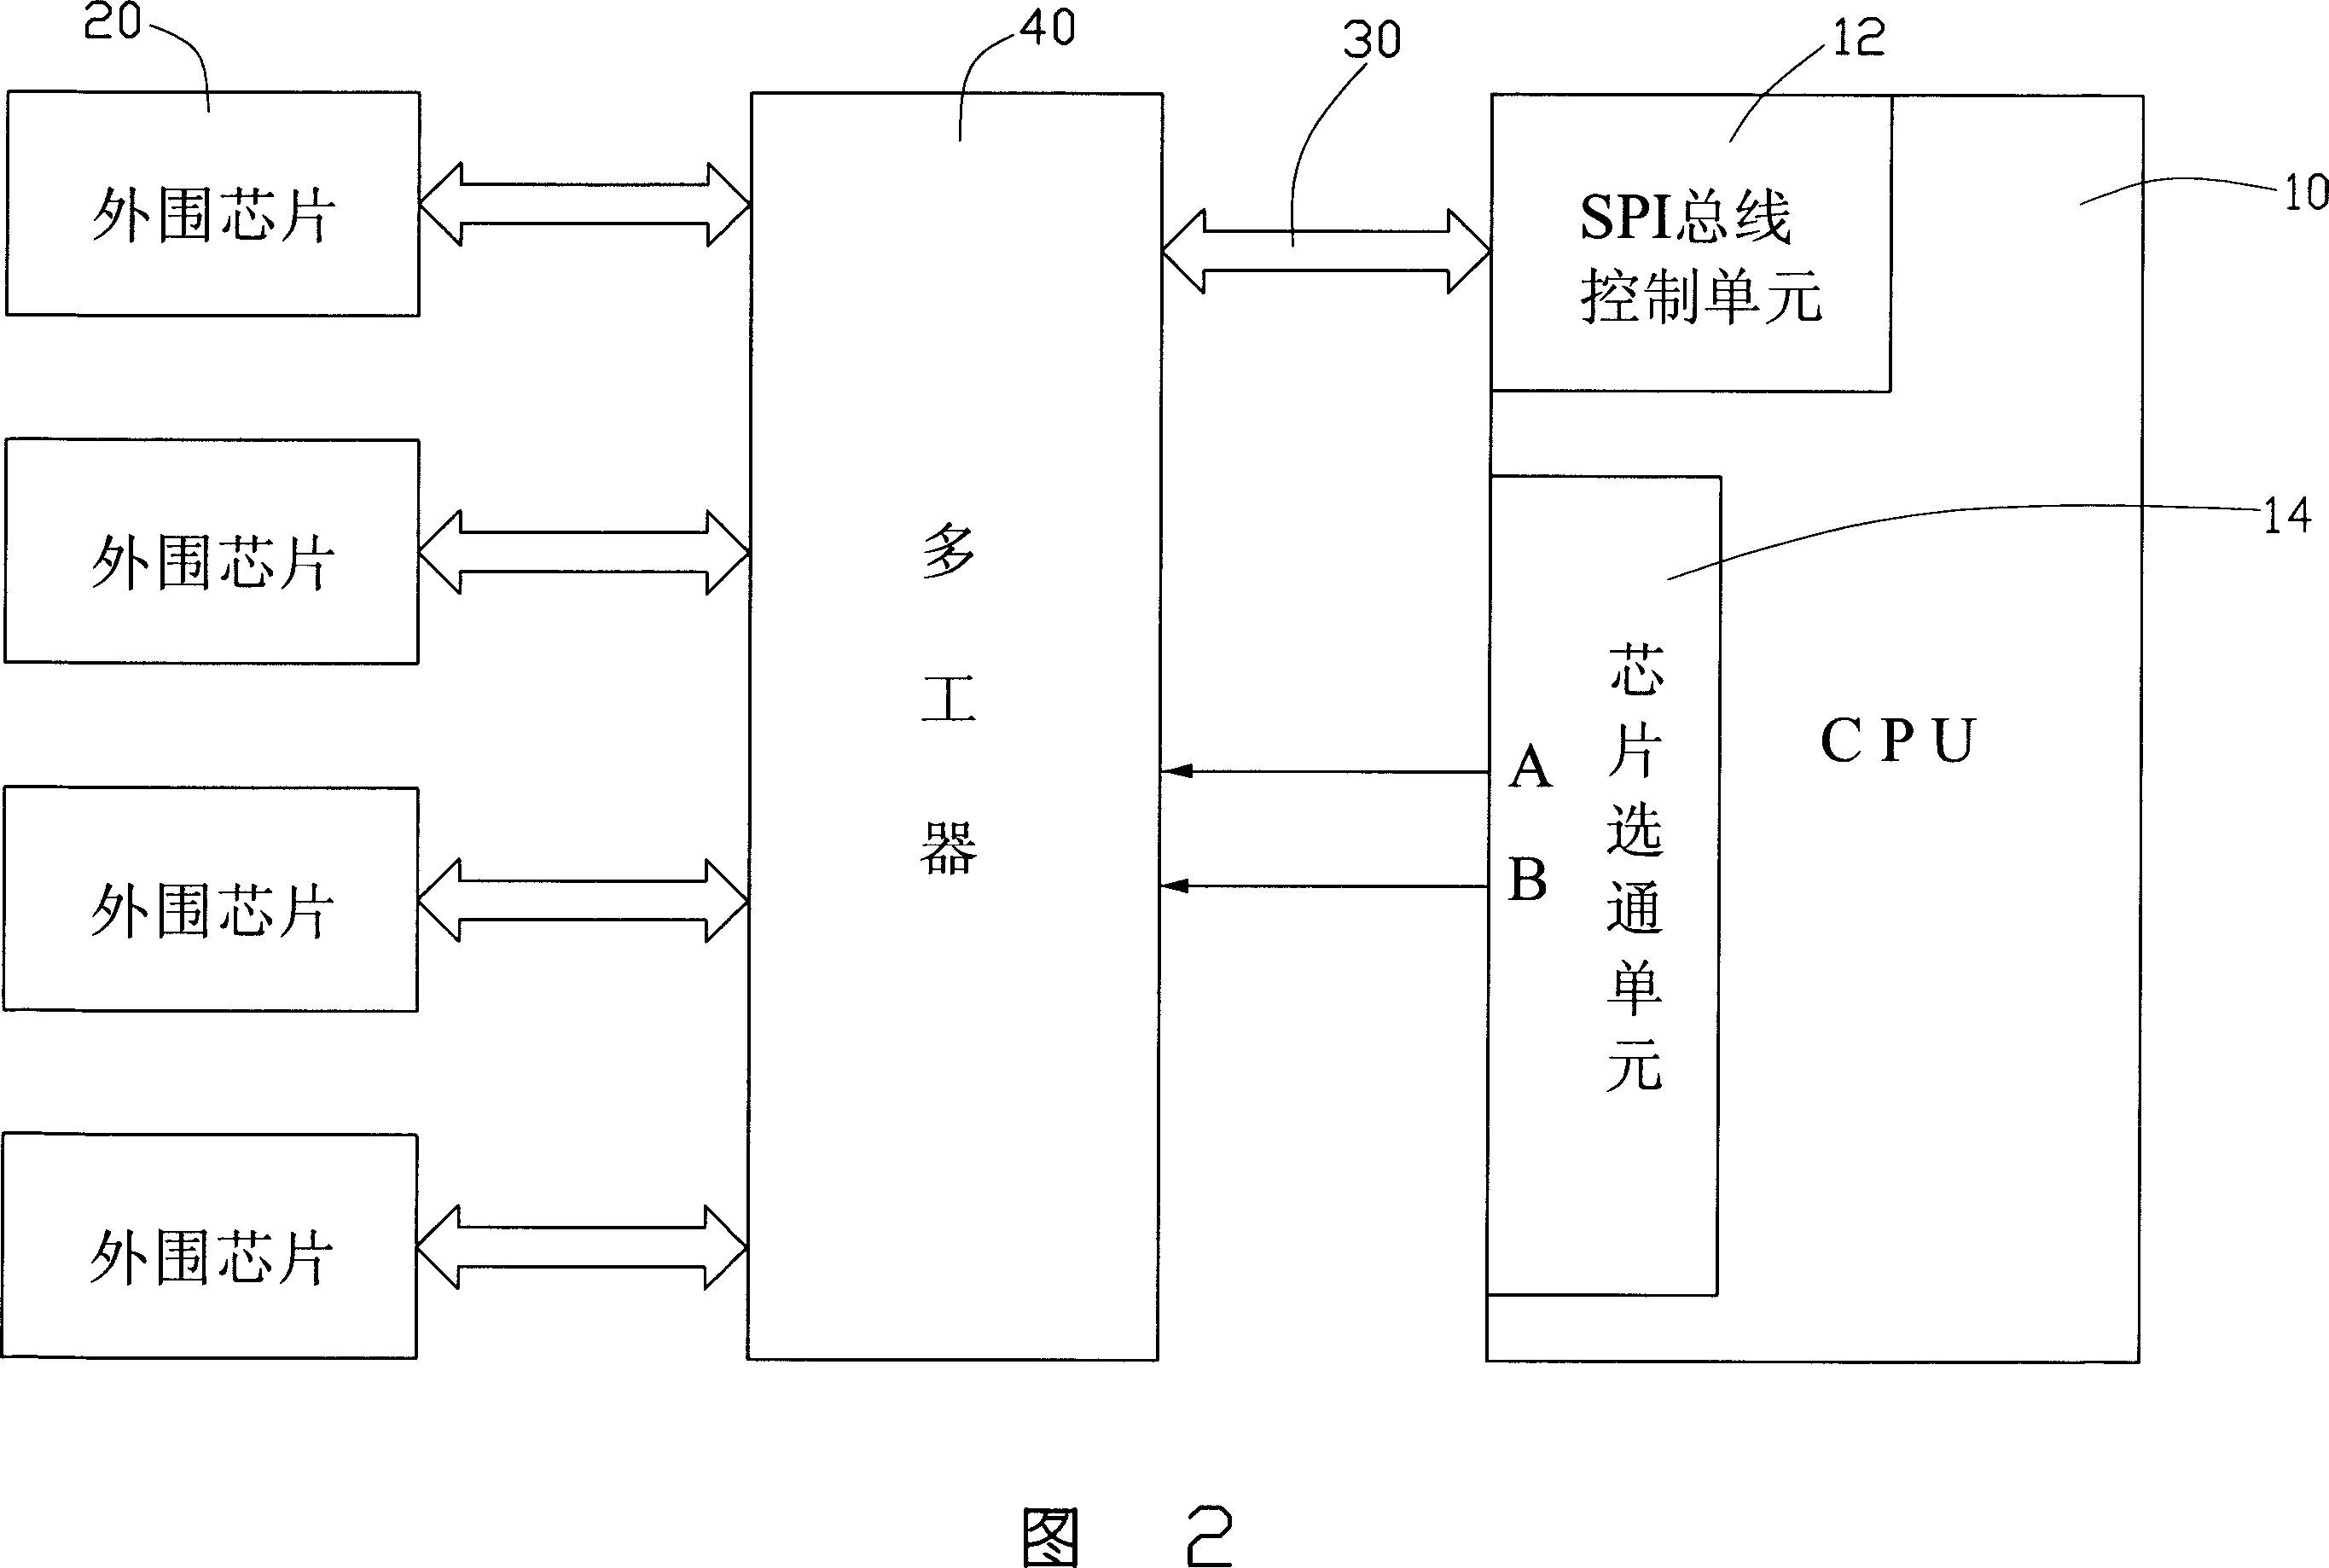 SPI apparatus telecommunication circuit